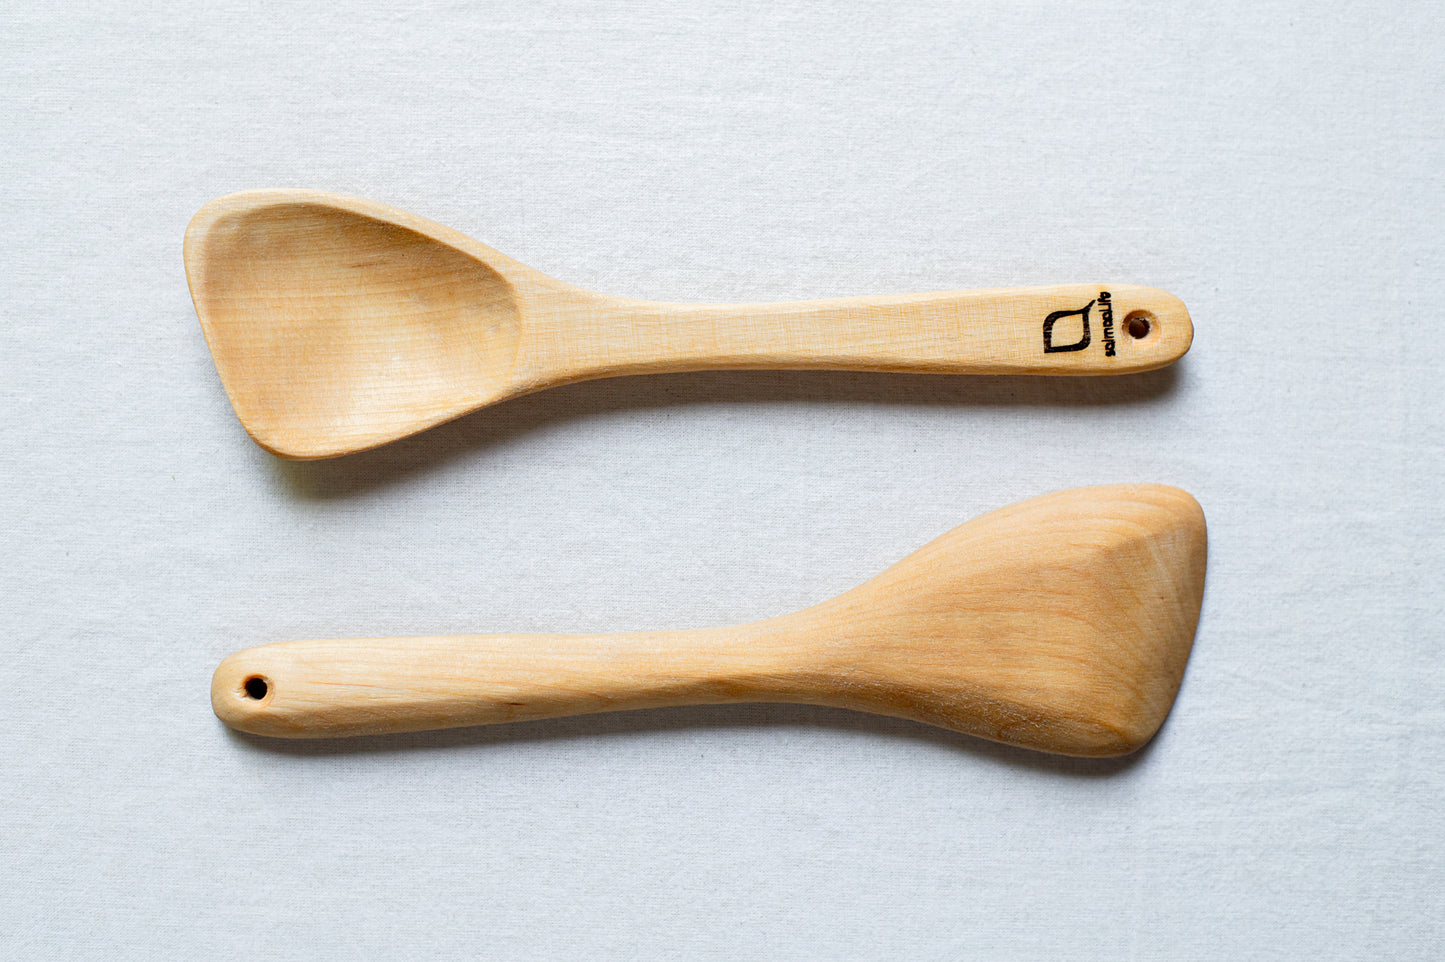 Birch wood spatula